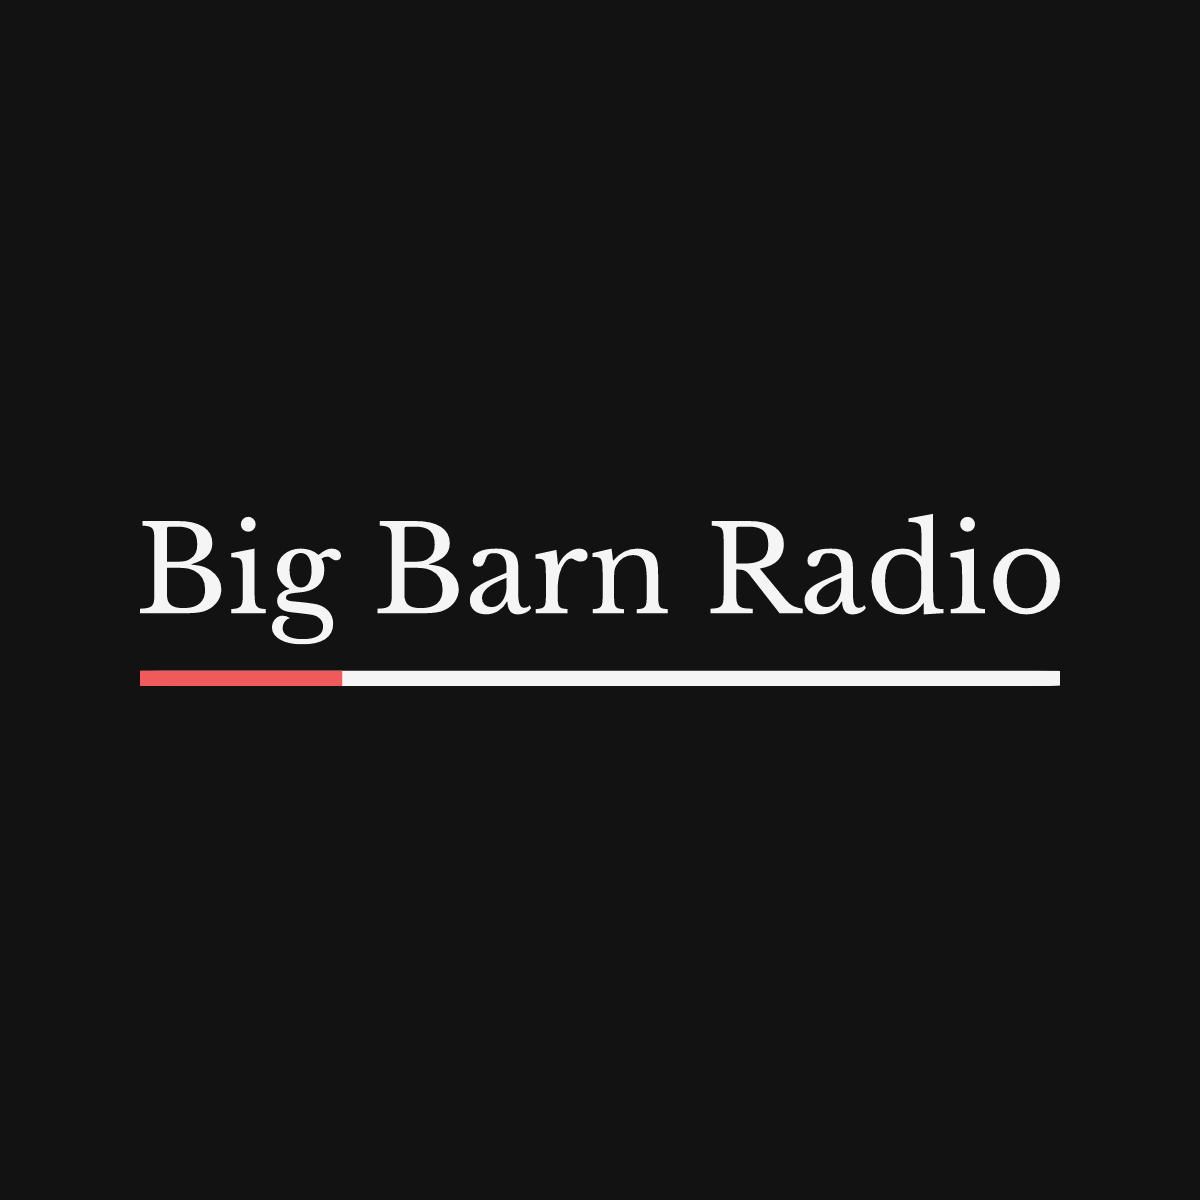 Big Barn Radio